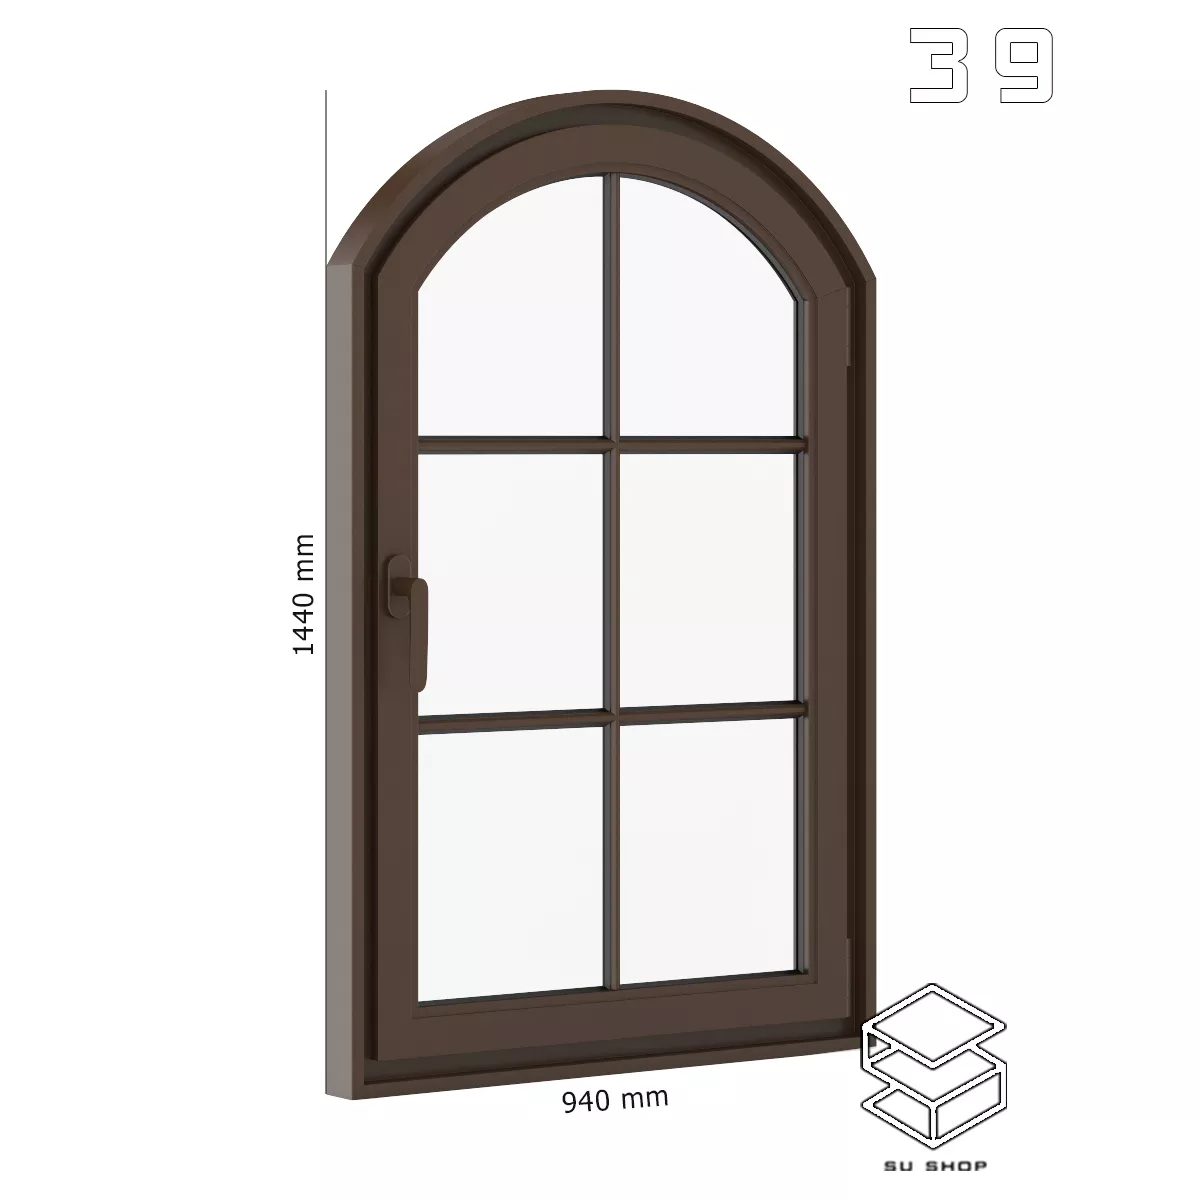 MODERN WINDOWS - SKETCHUP 3D MODEL - VRAY OR ENSCAPE - ID16780